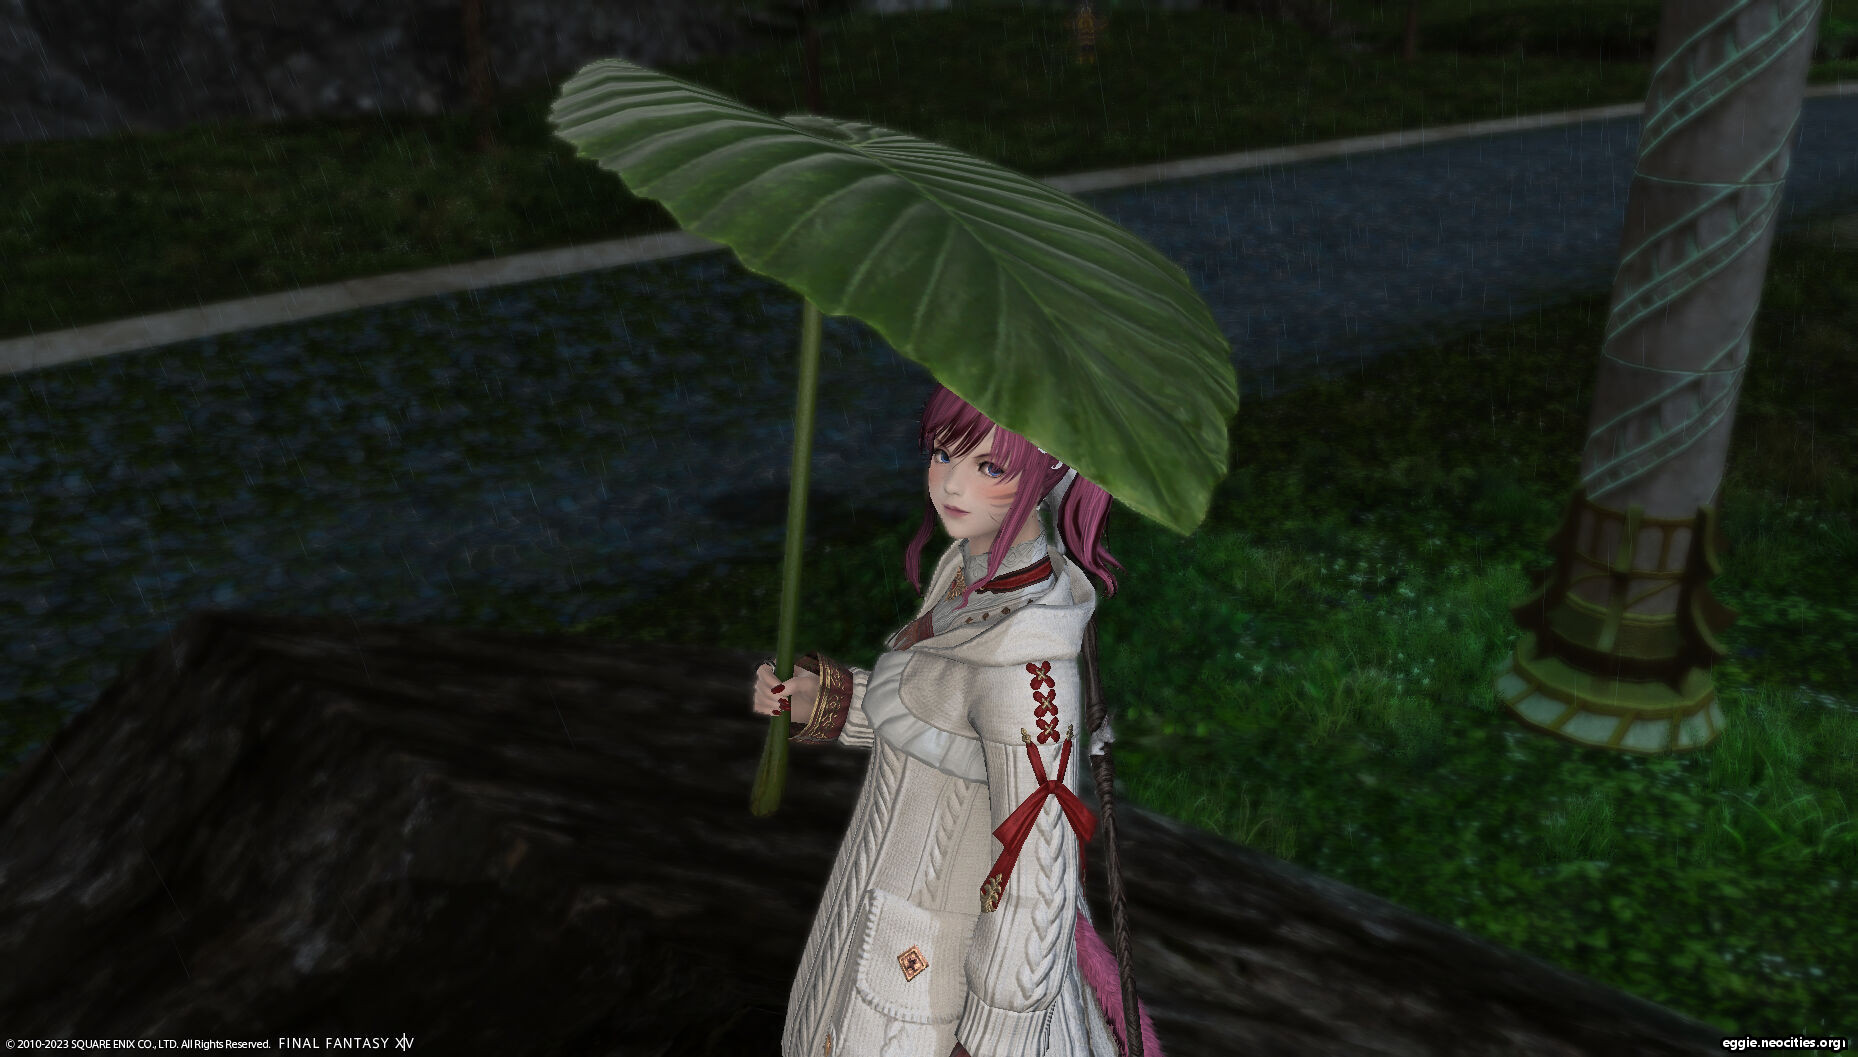 Zel using a giant Taro leaf as an umbrella